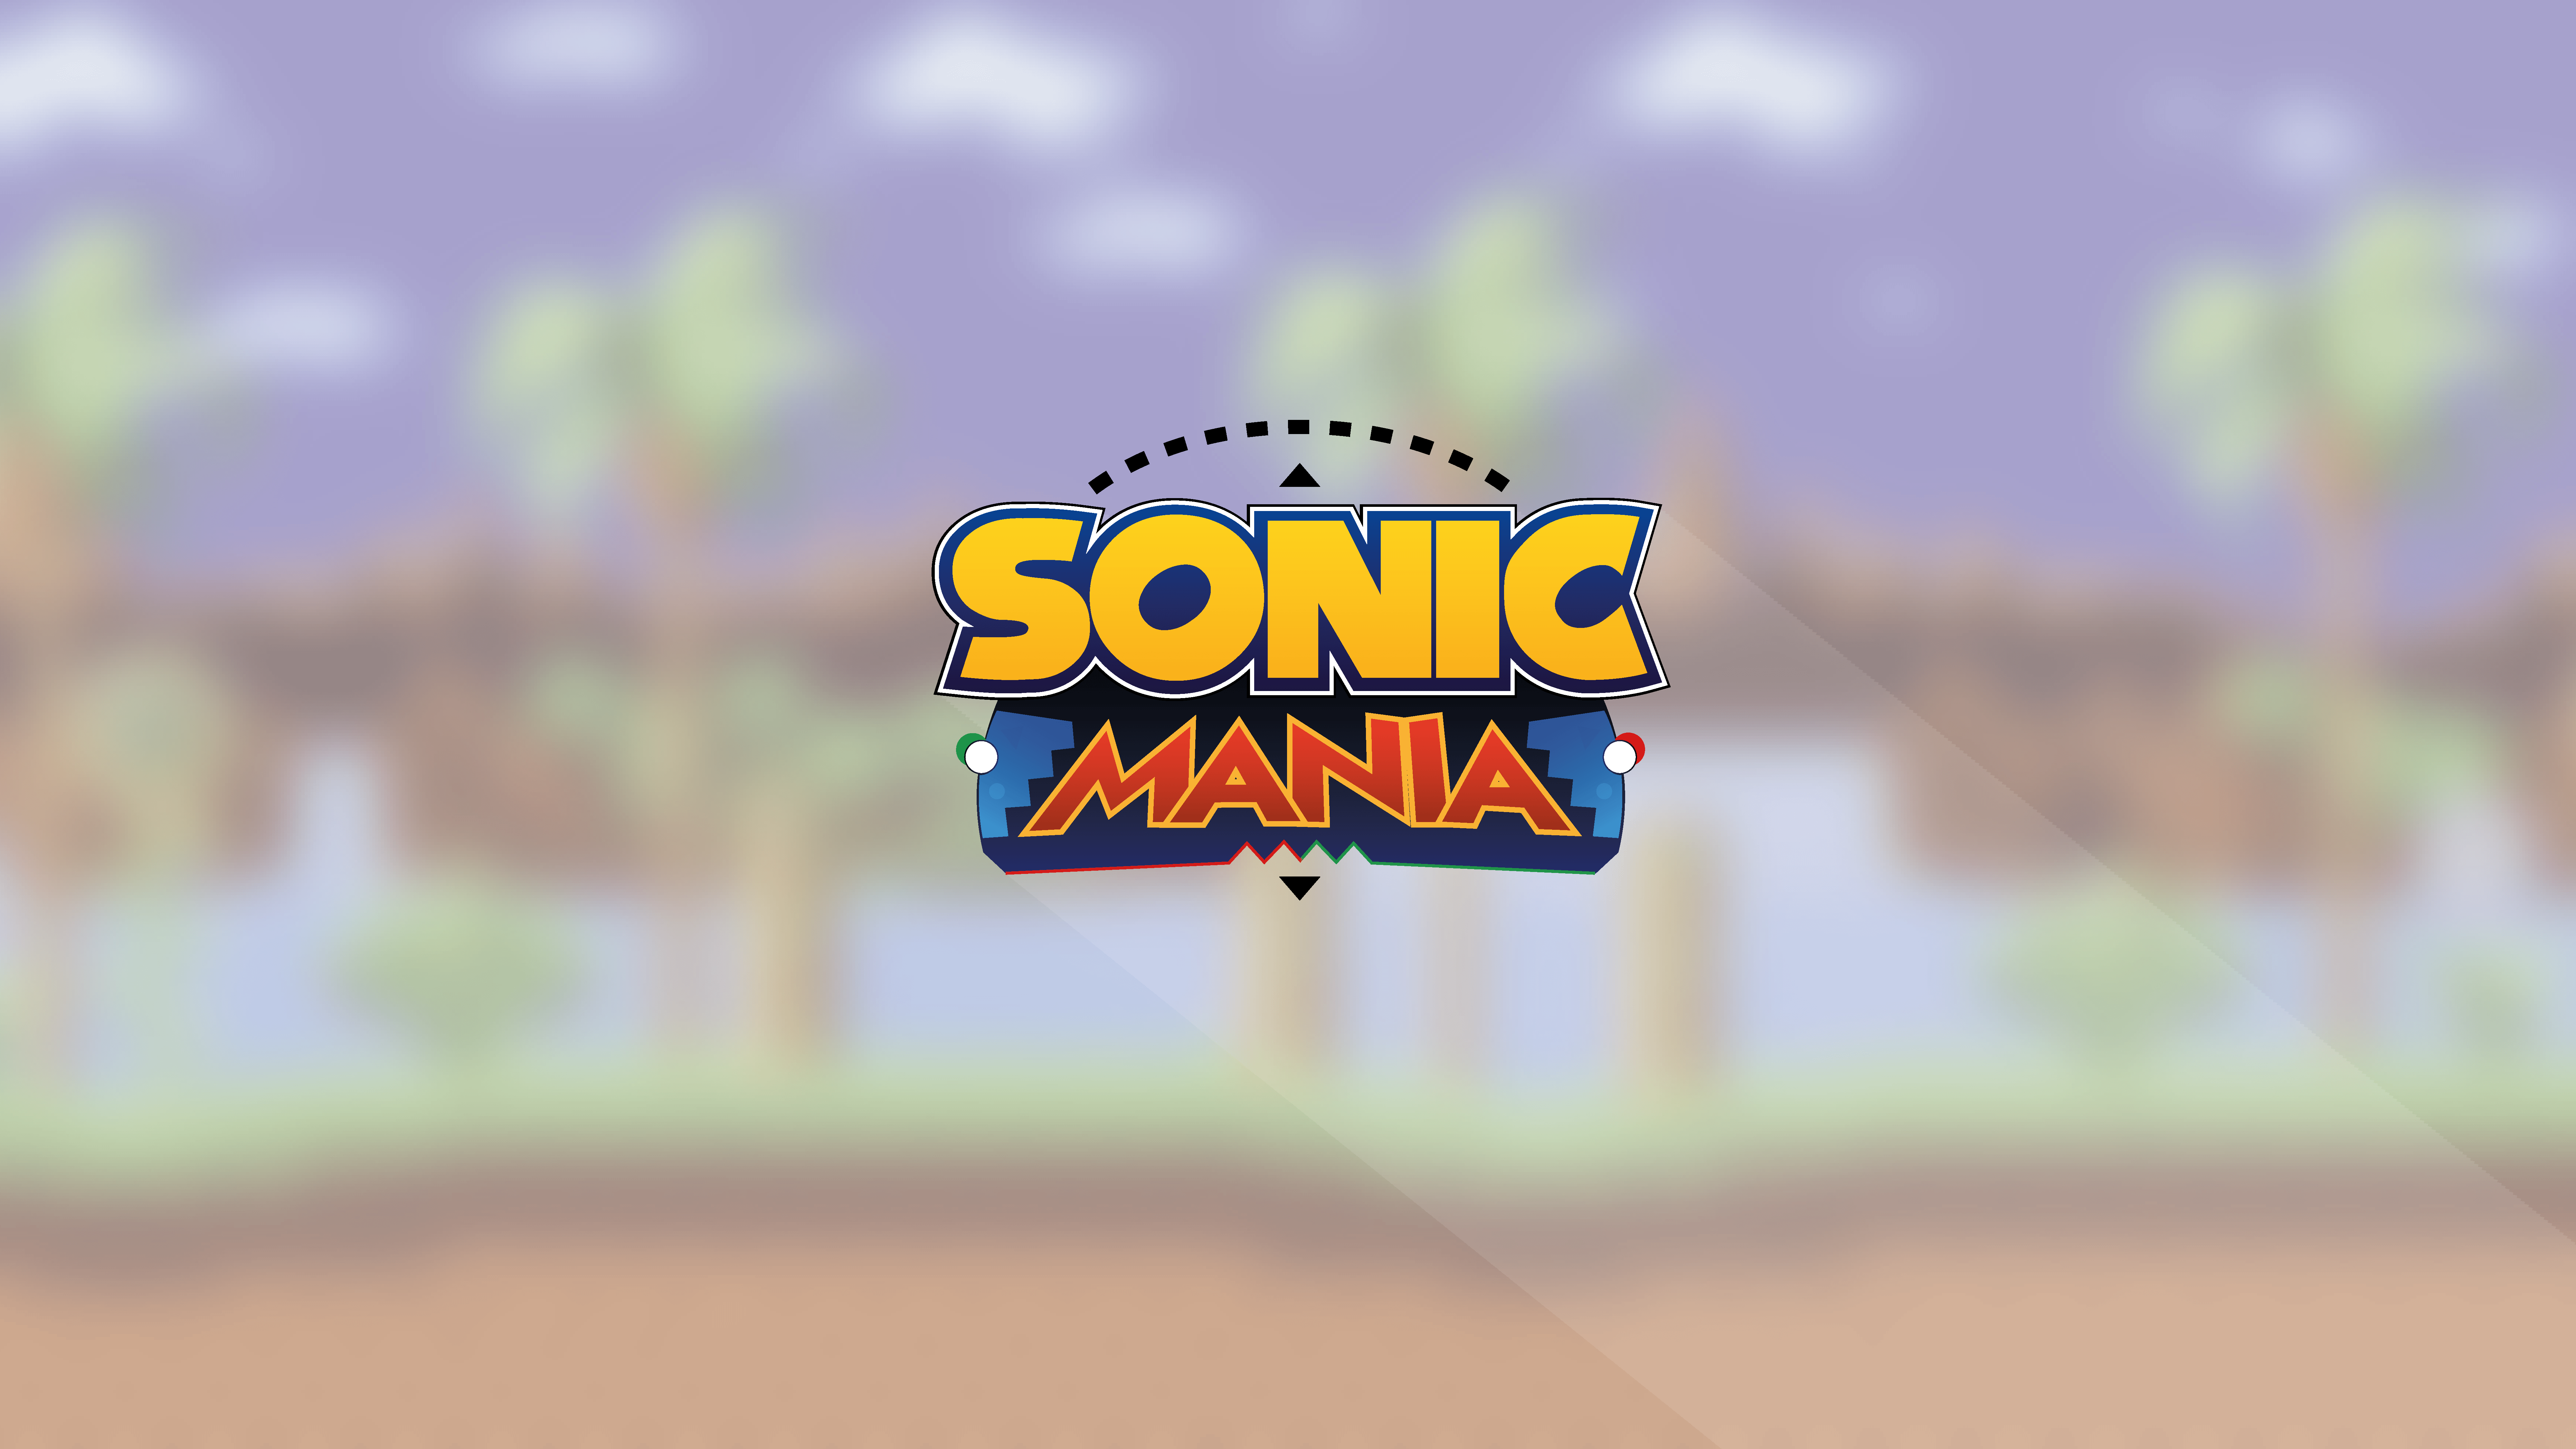 Sonic Mania Wallpaper 1920 x 1080